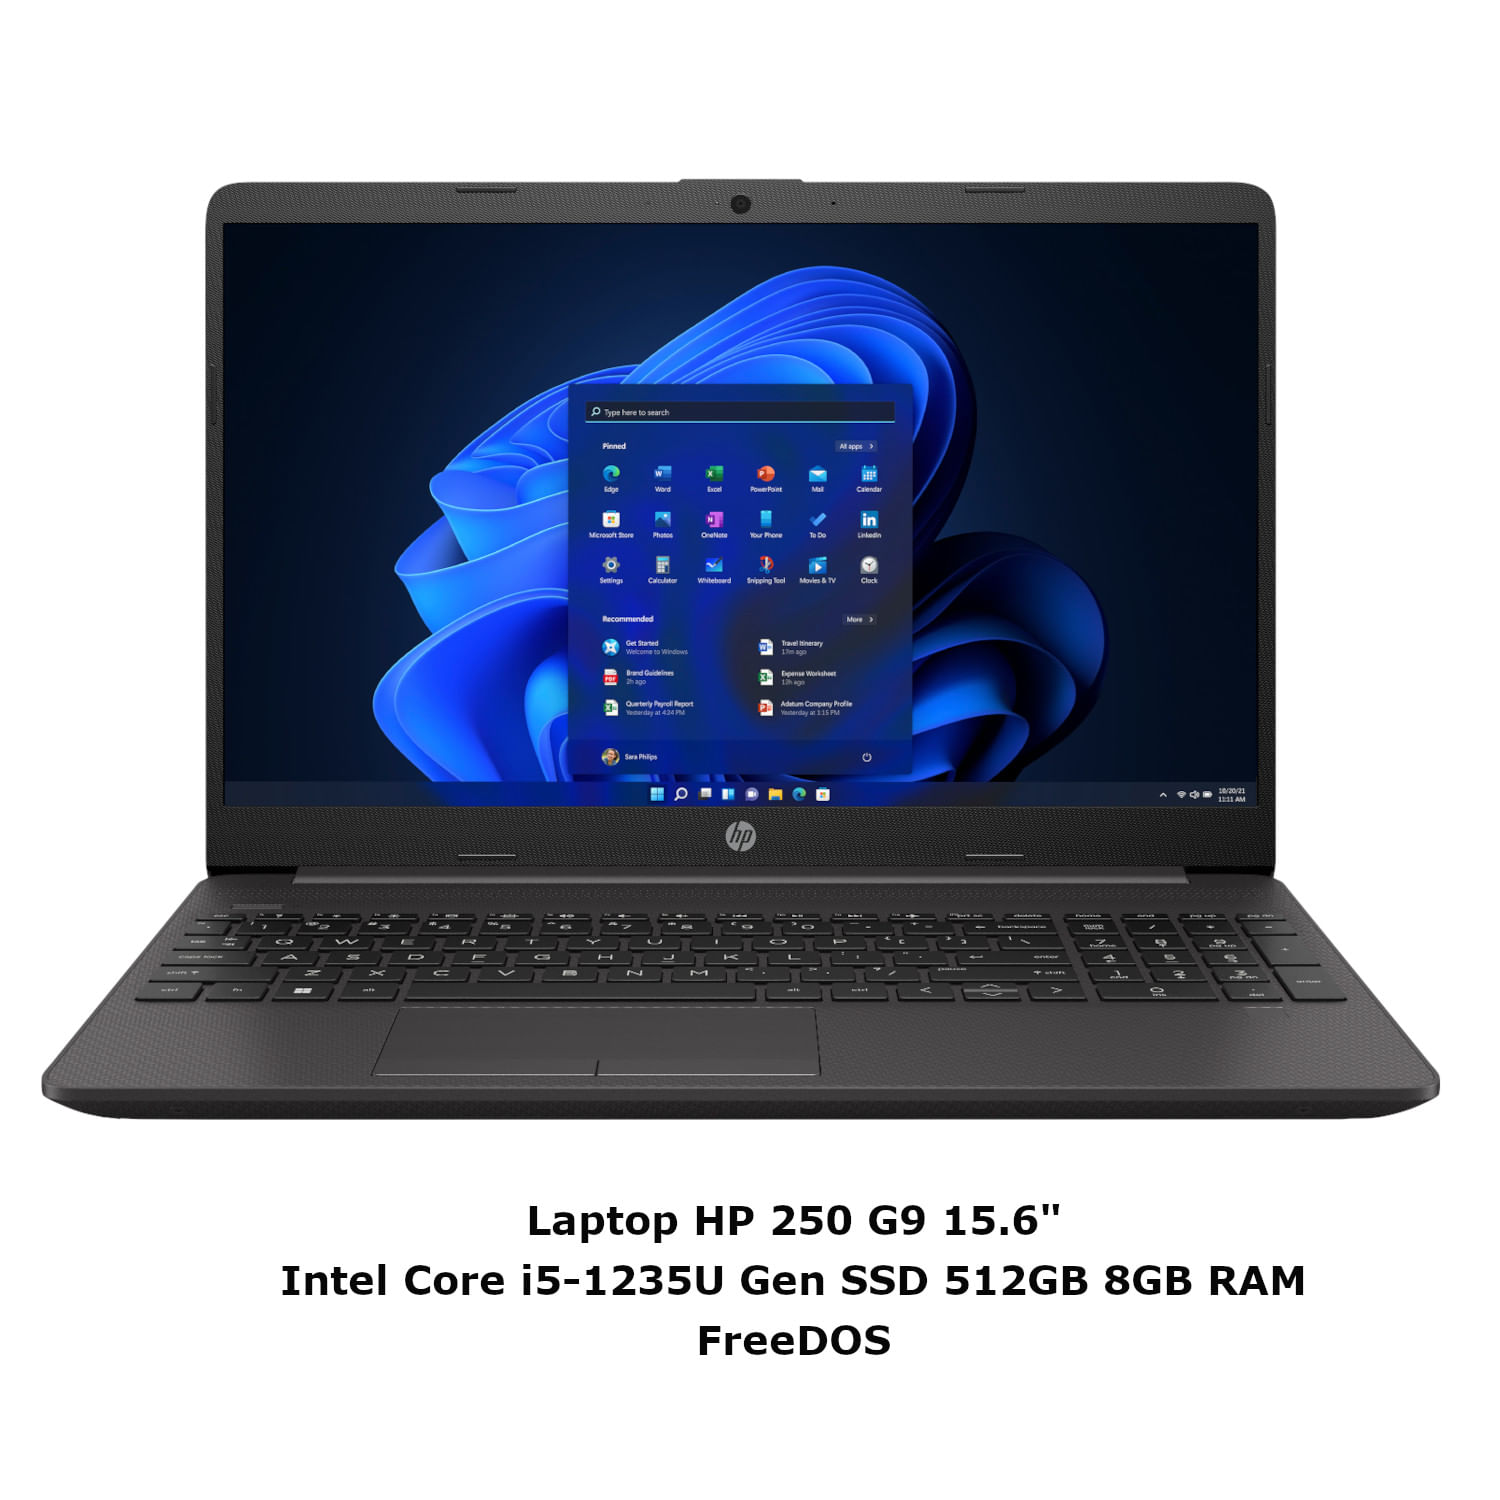 Laptop HP 250 G9 Core i5-1235U 512GB SSD 8GB 15.6" FreeDOS